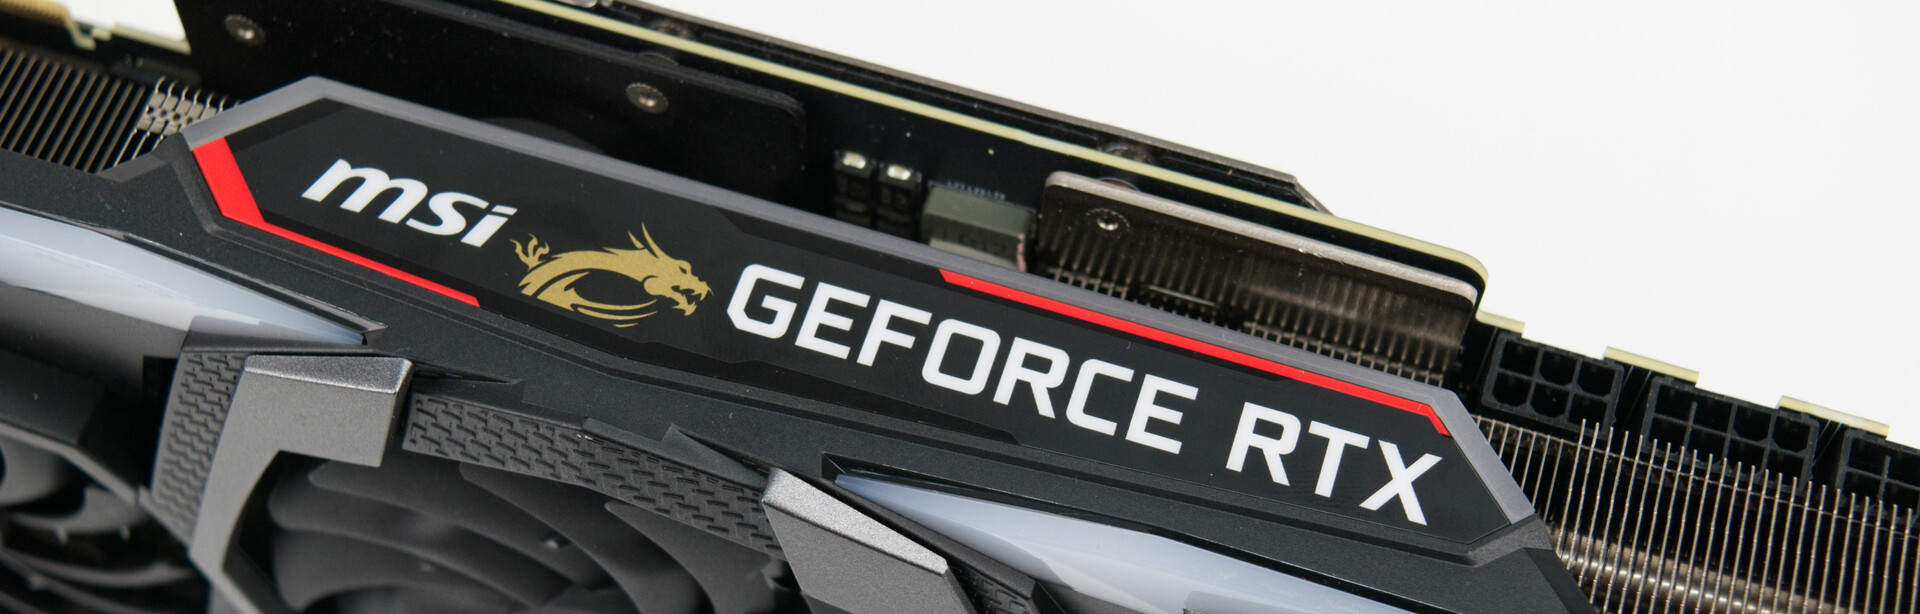 MSI GeForce RTX 2080 Ti Gaming X Trio Desktop GPU Review: The